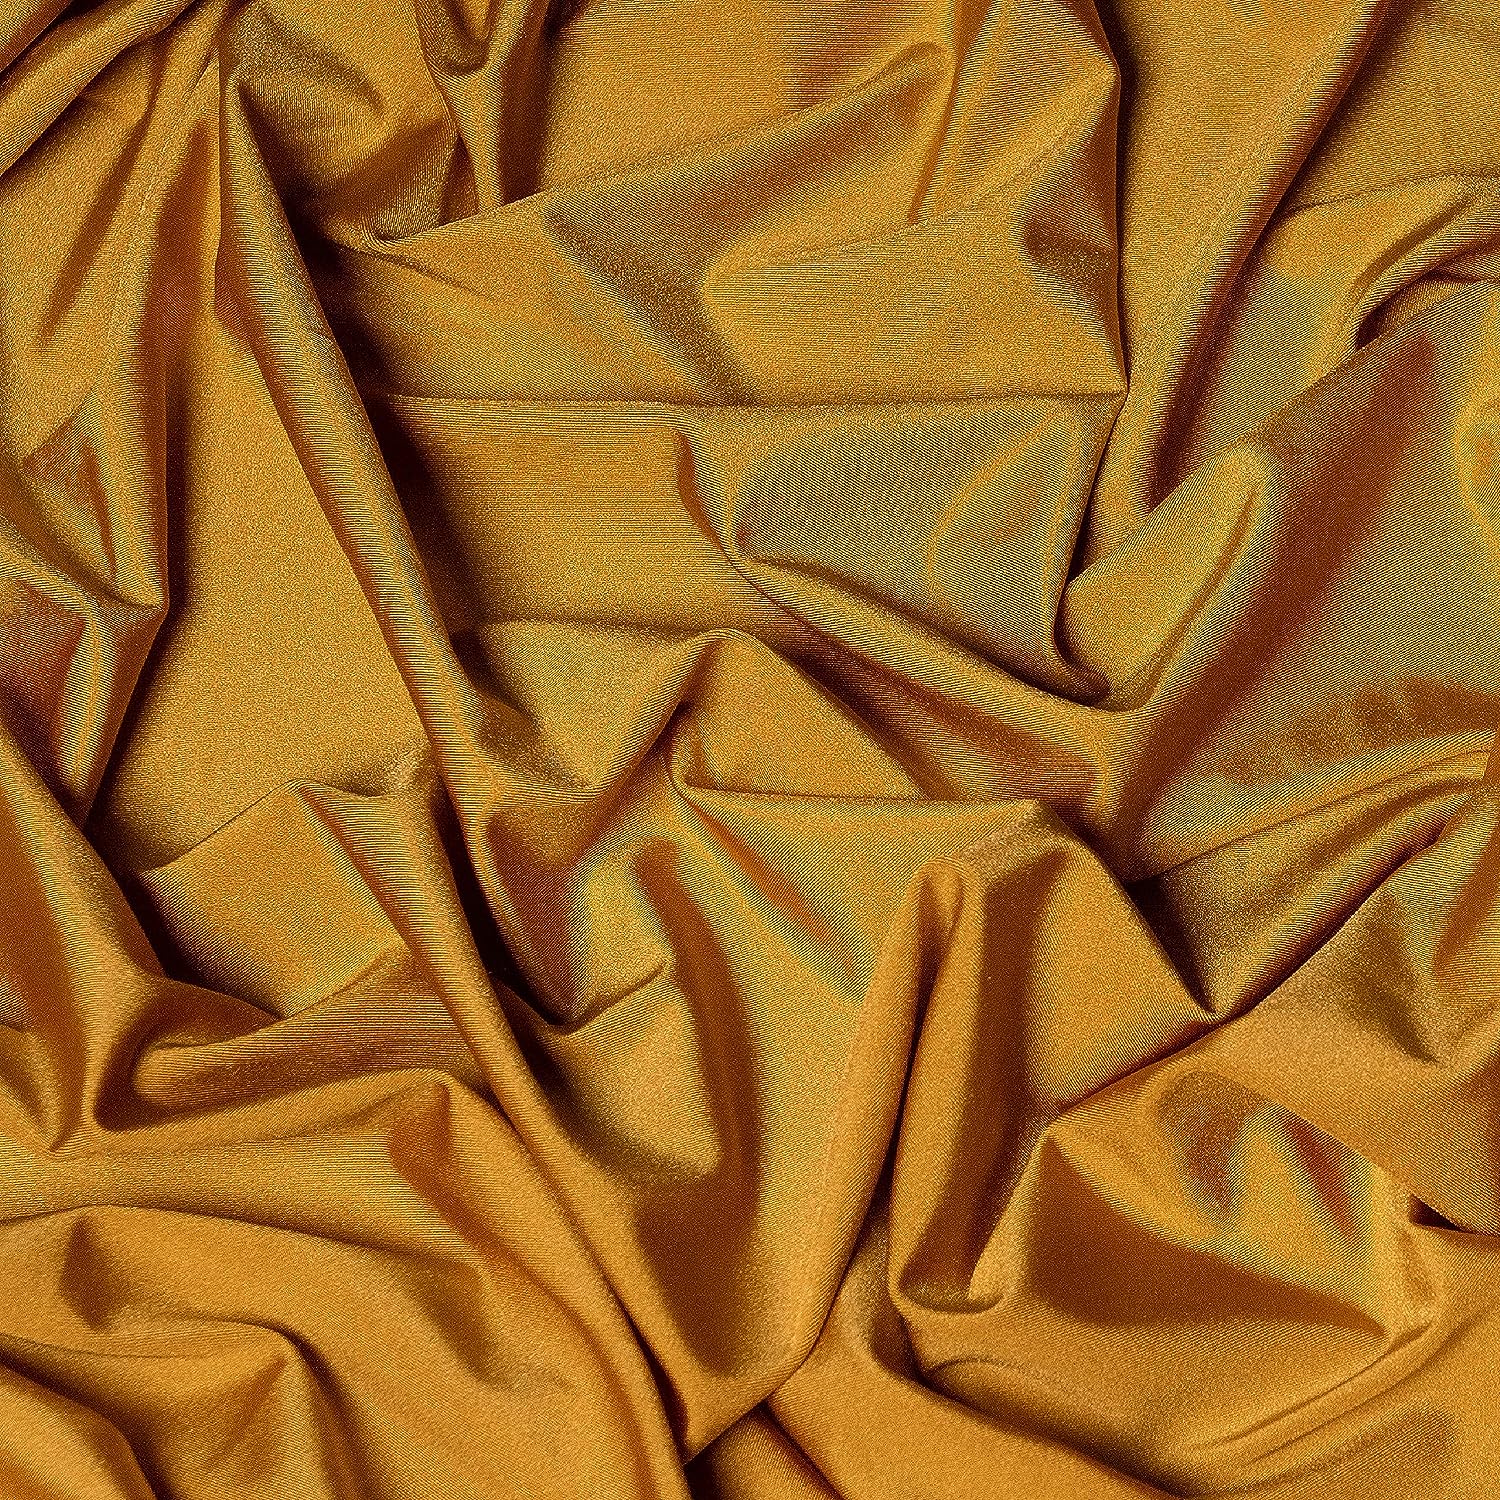 Antique Gold Luxury Nylon Spandex Fabric By The YardICE FABRICSICE FABRICSBy The Yard (58" Width)Antique Gold Luxury Nylon Spandex Fabric By The Yard ICE FABRICS